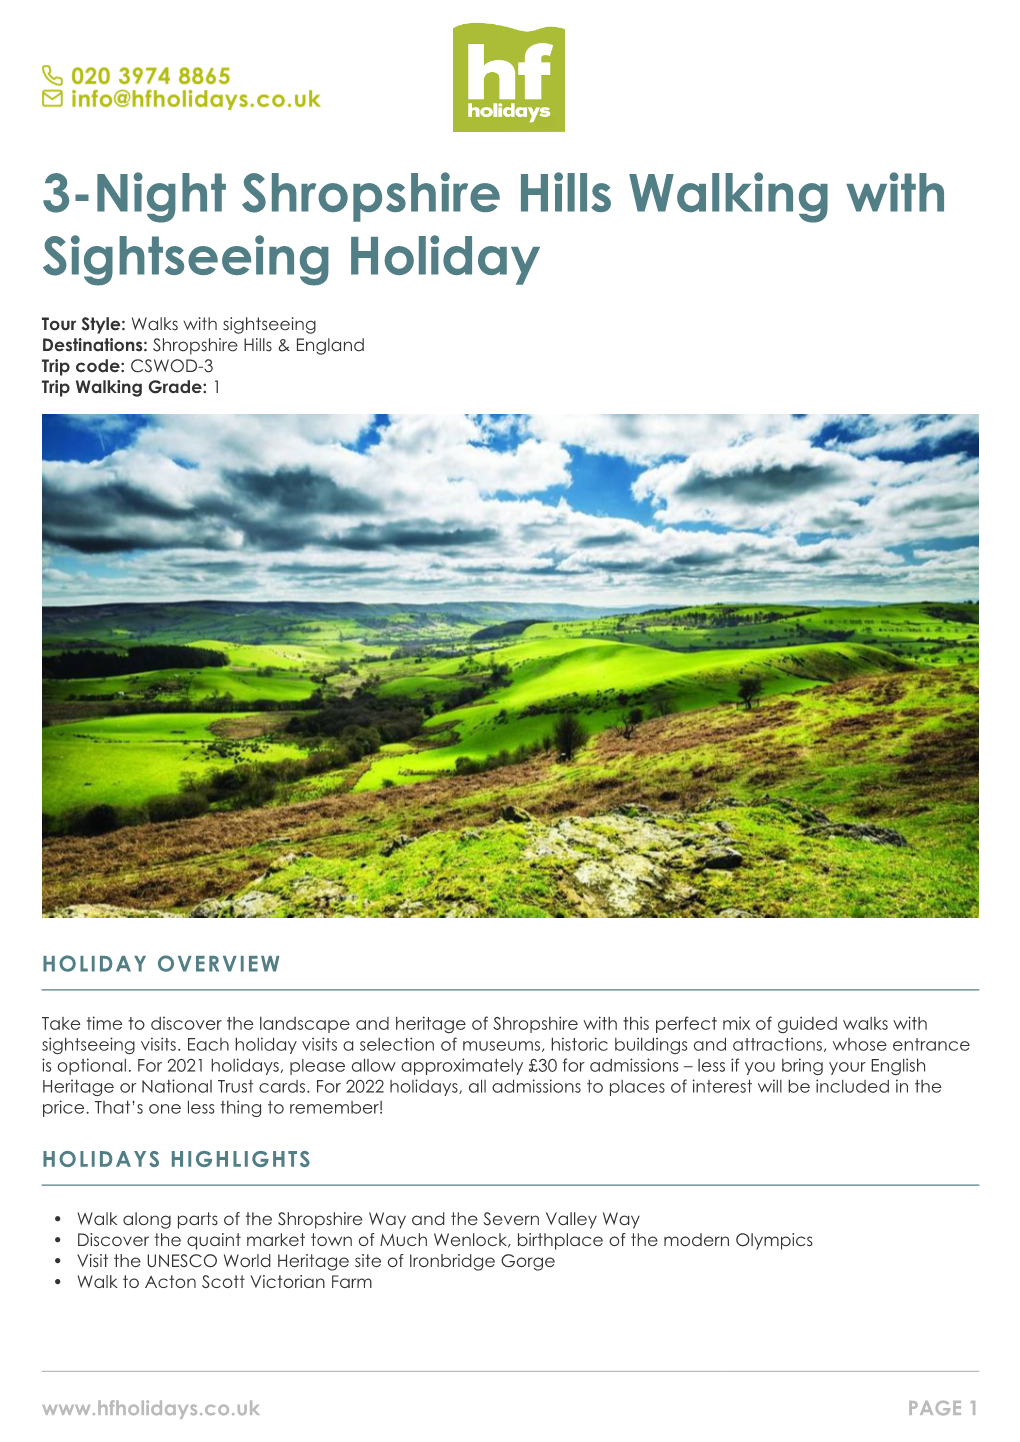 3-Night Shropshire Hills Walking with Sightseeing Holiday